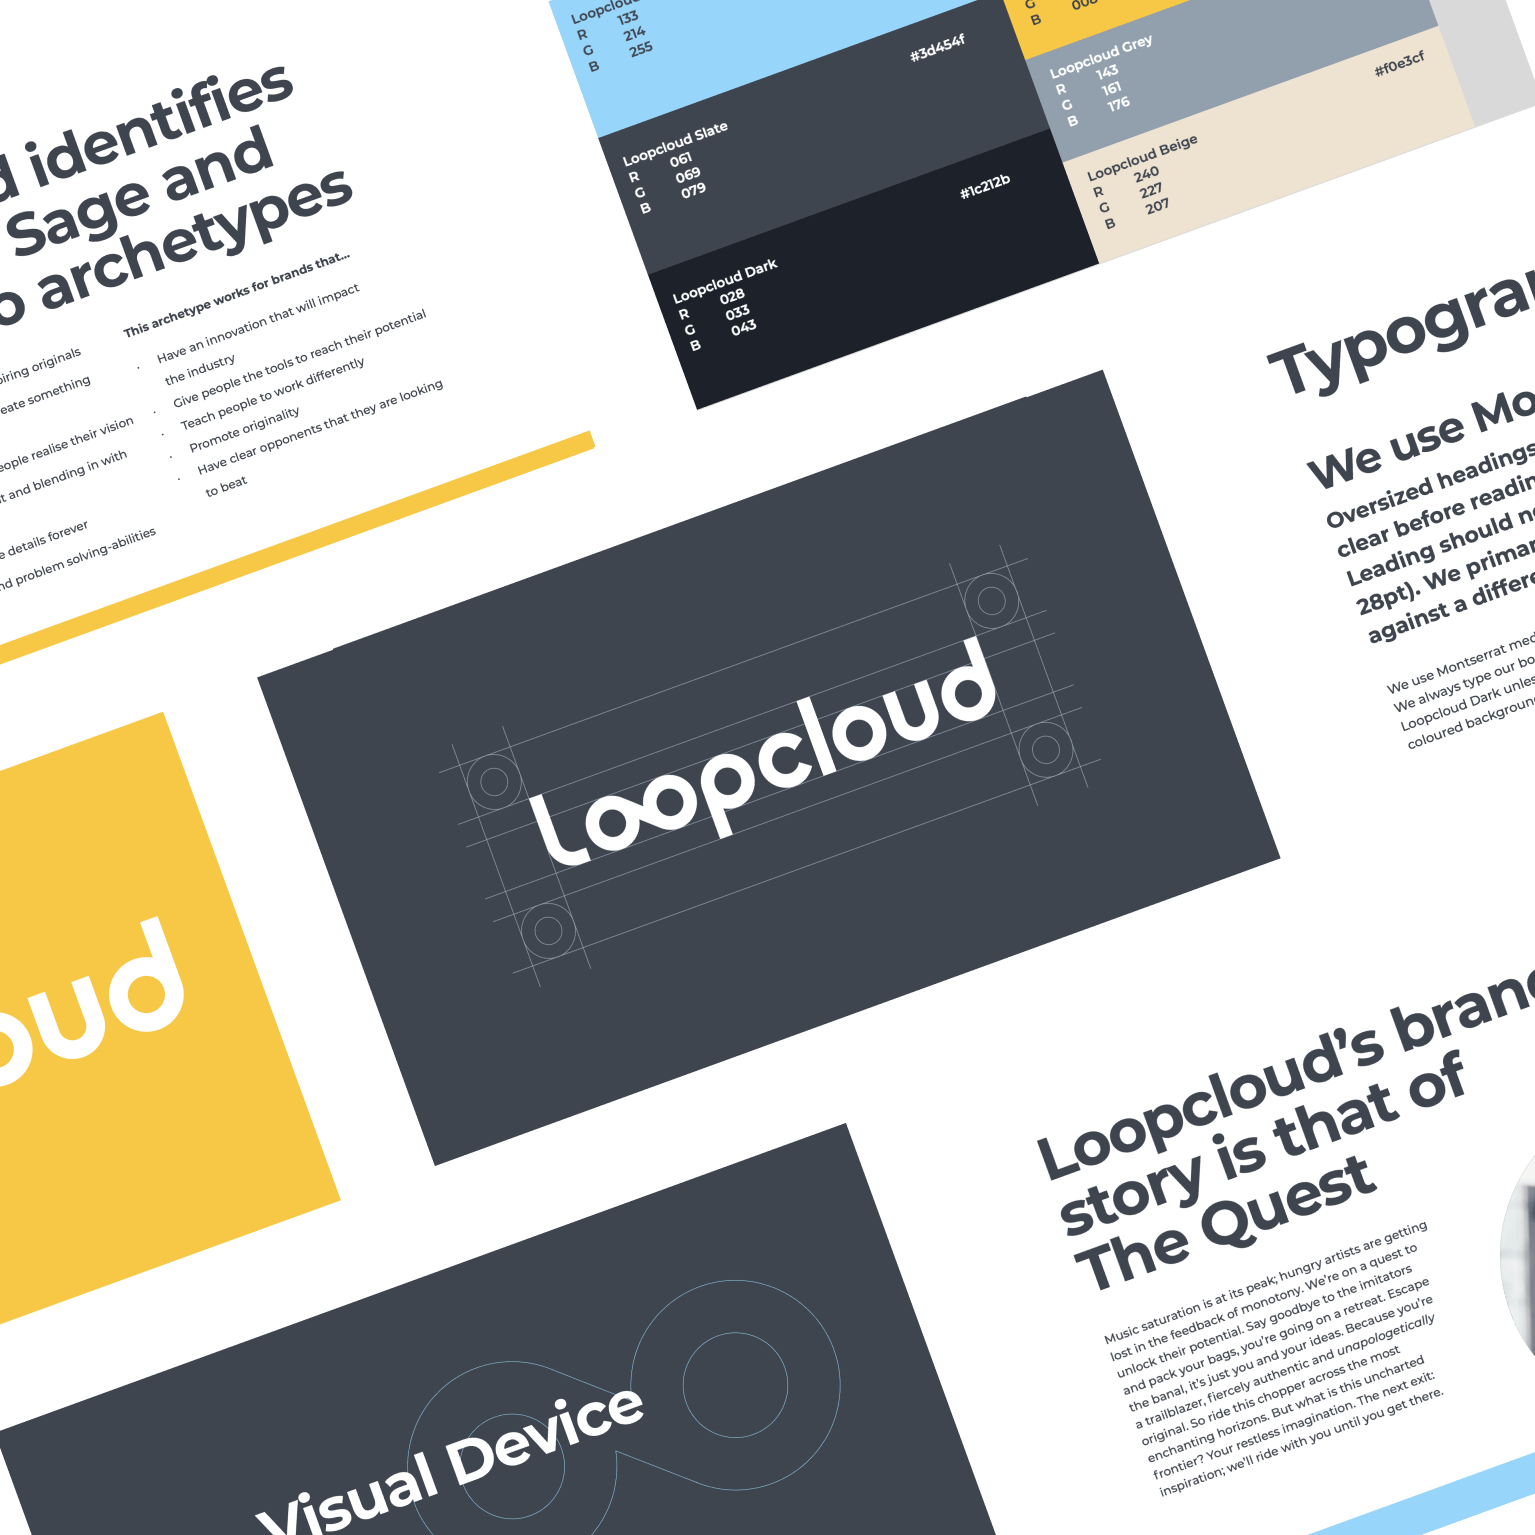 Loopcloud Brand Development Image